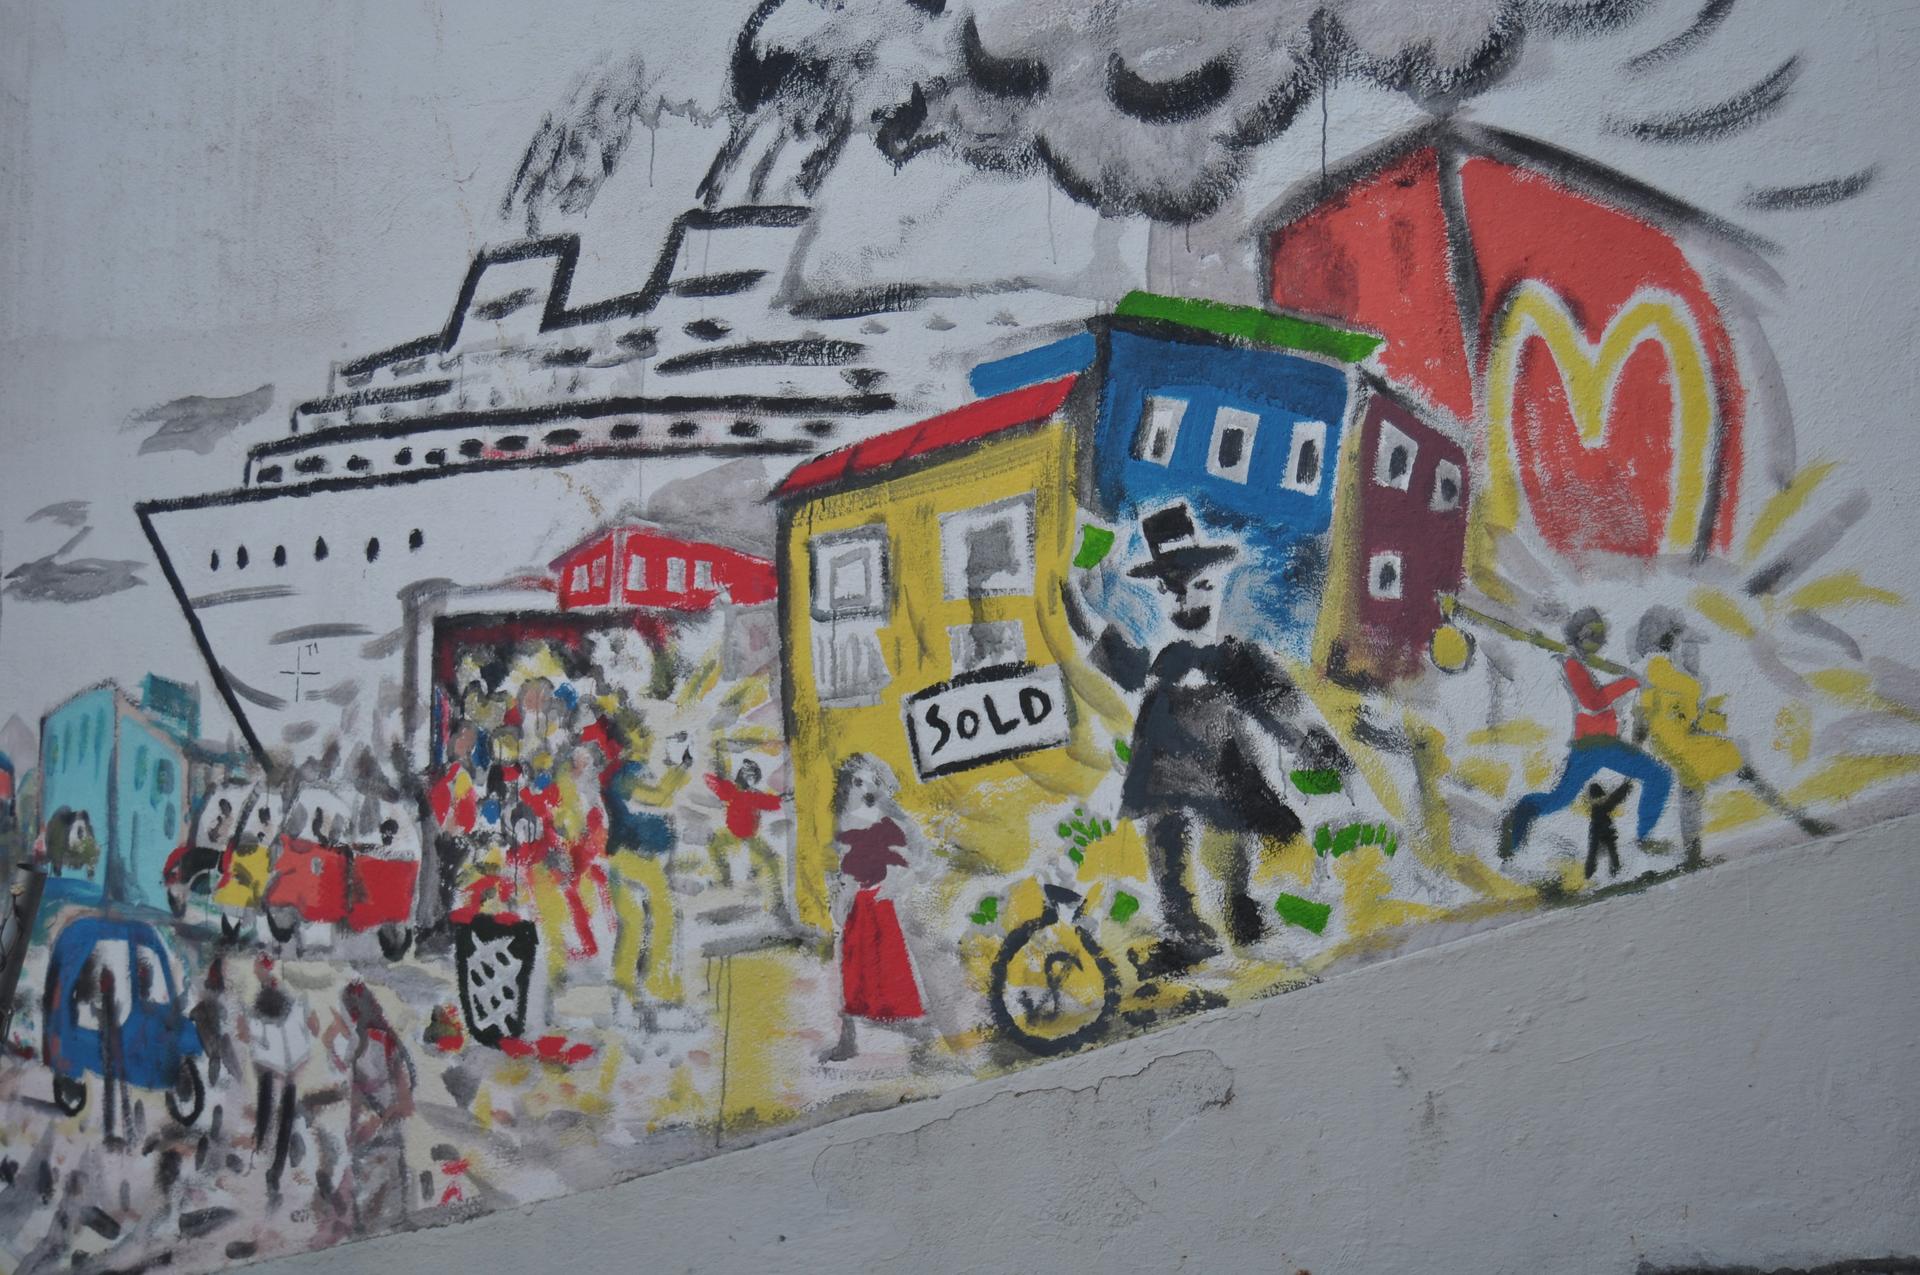 an anti-gentrification mural in lisbon